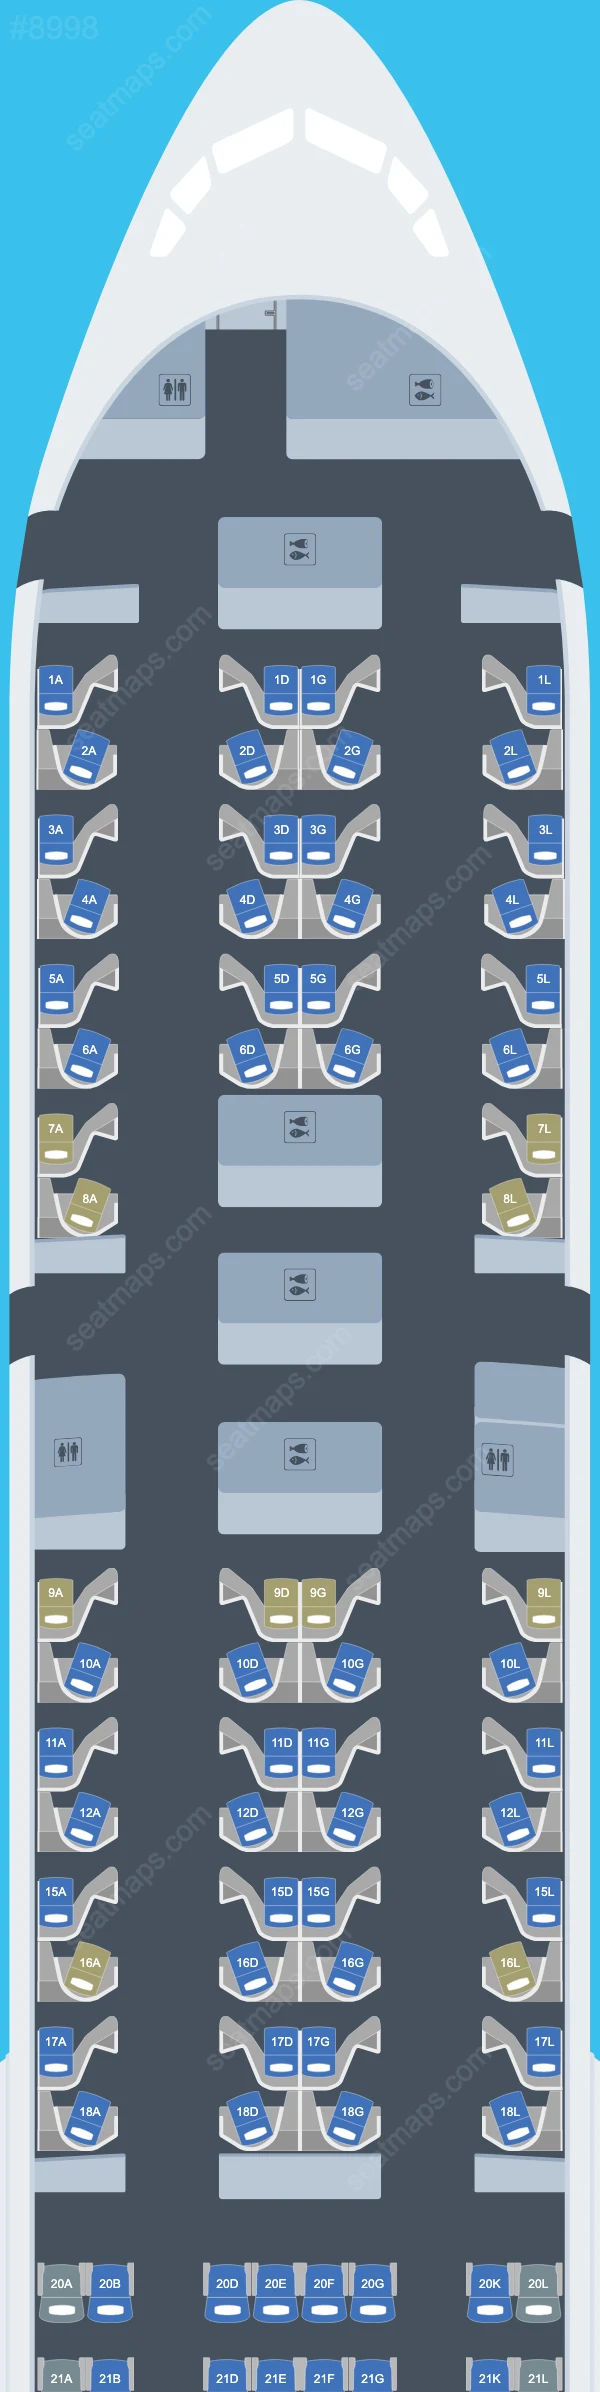 United Boeing 777 Seat Maps 777-300 ER